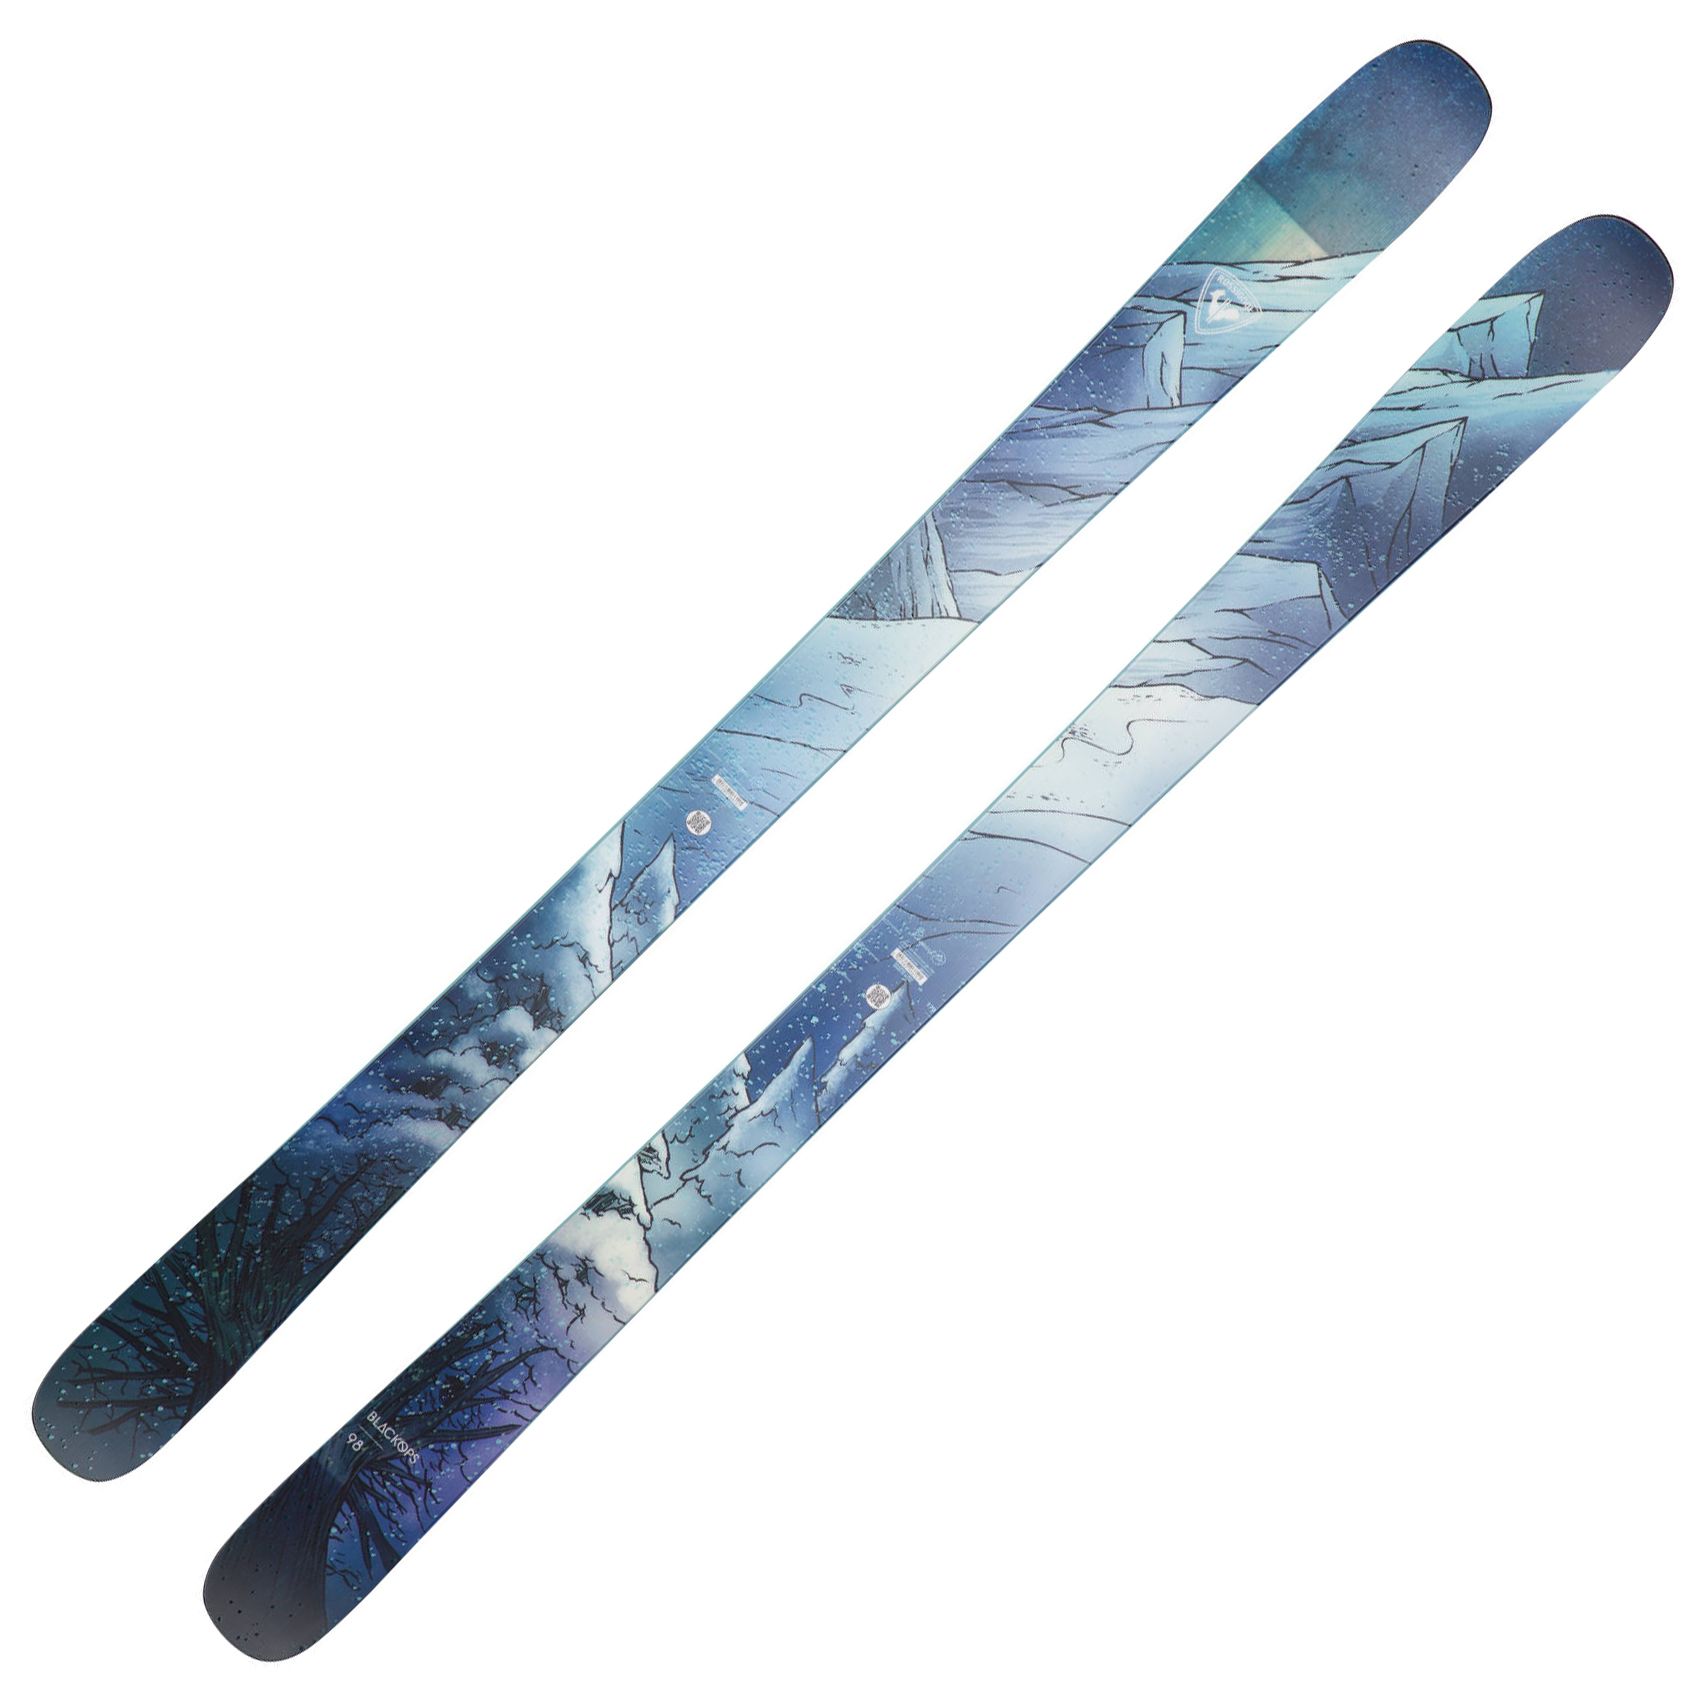 Rossignol Black Ops 92 Ski & Look Xpress 11 GW Binding Pkg 2023